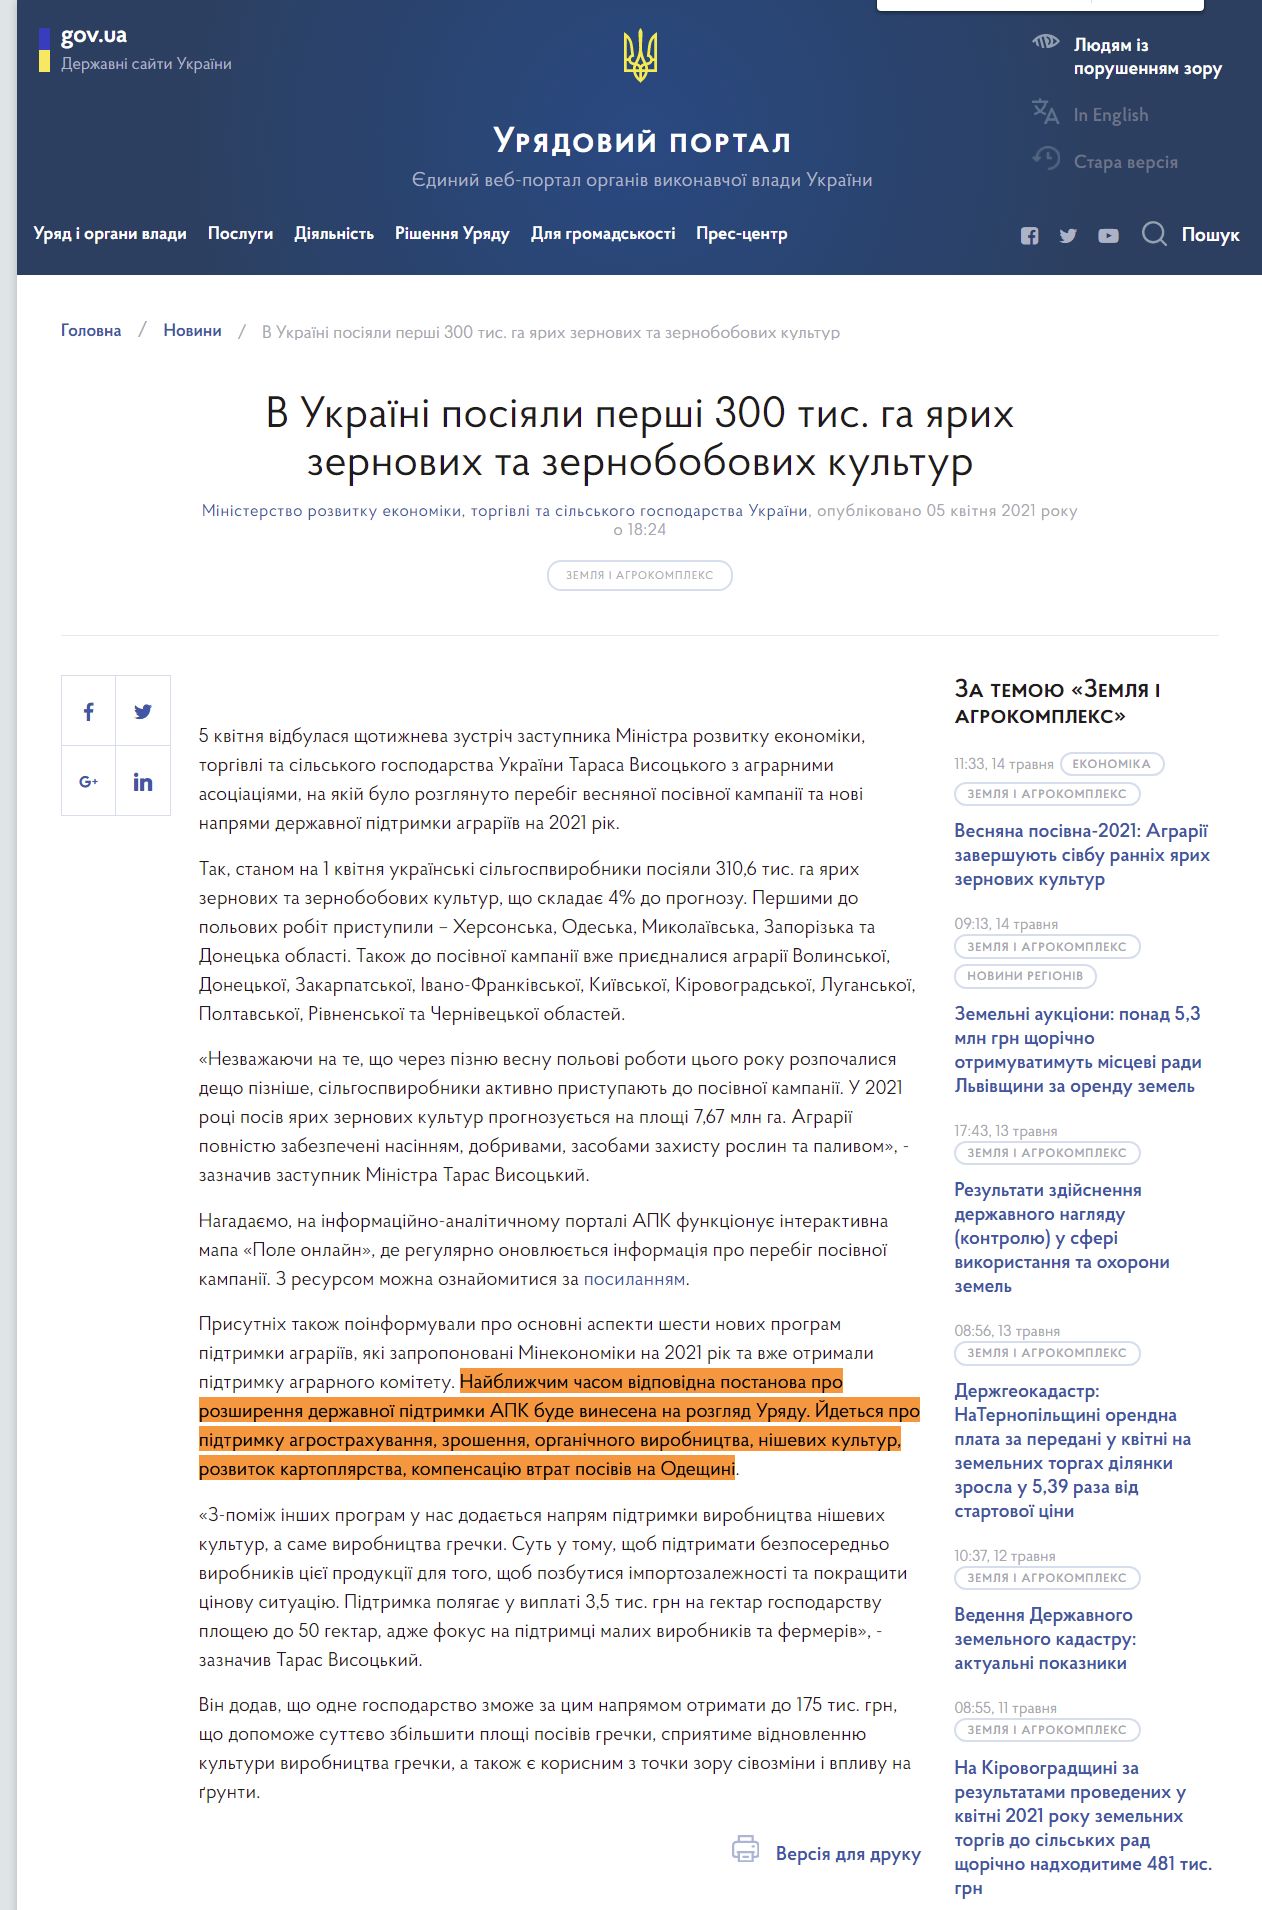 https://www.kmu.gov.ua/news/v-ukrayini-posiyali-pershi-300-tis-ga-yarih-zernovih-ta-zernobobovih-kultur